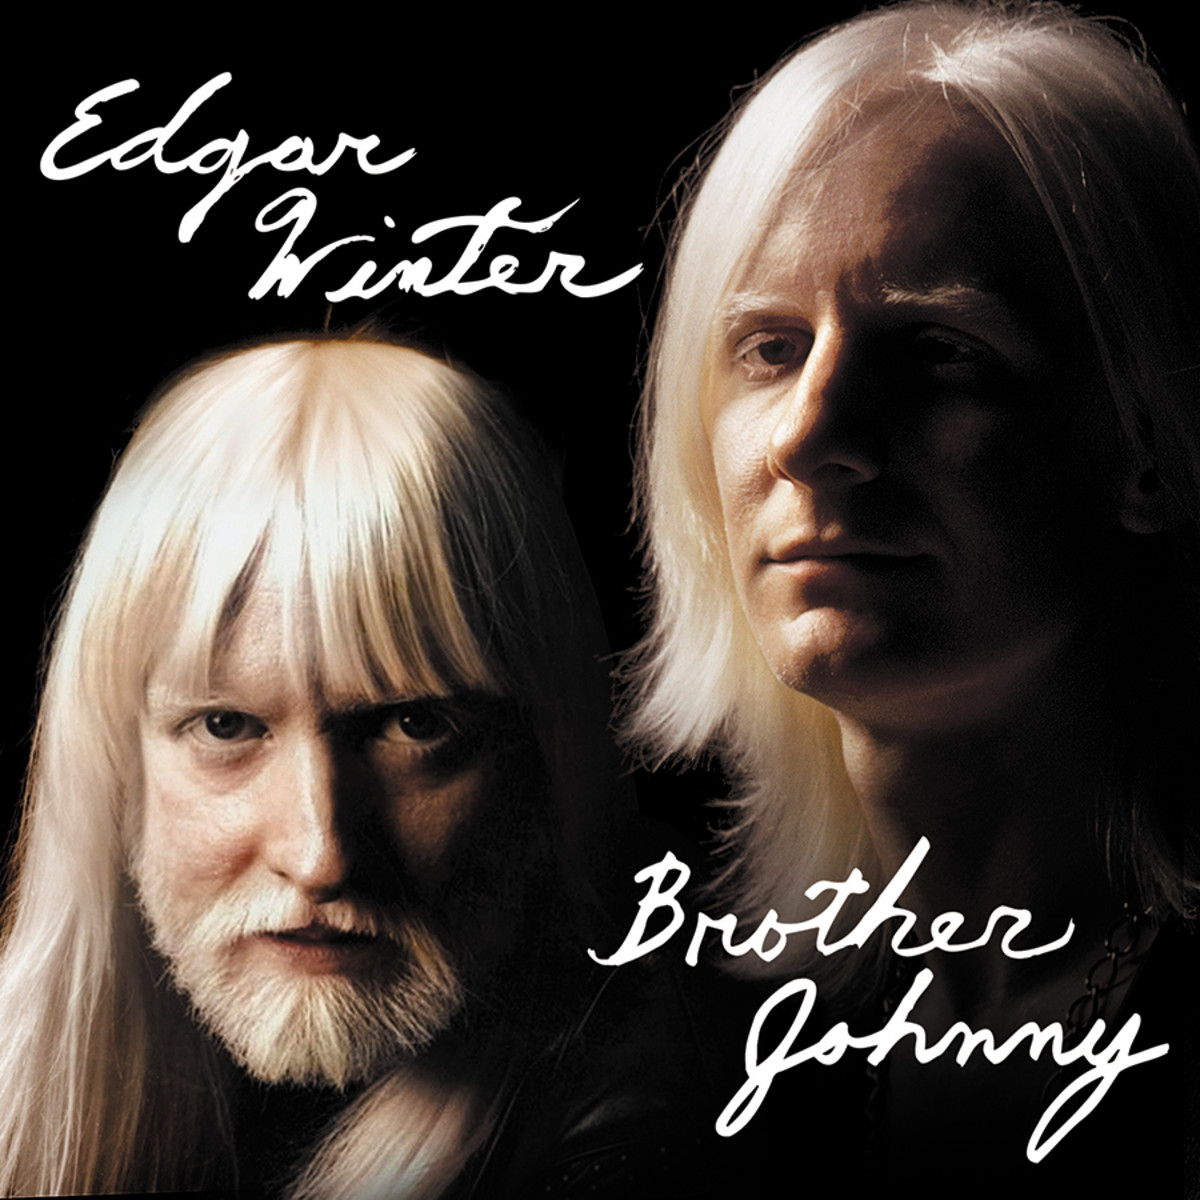 Edgar+Winter_Brother+Johnny_album+cover-1_c